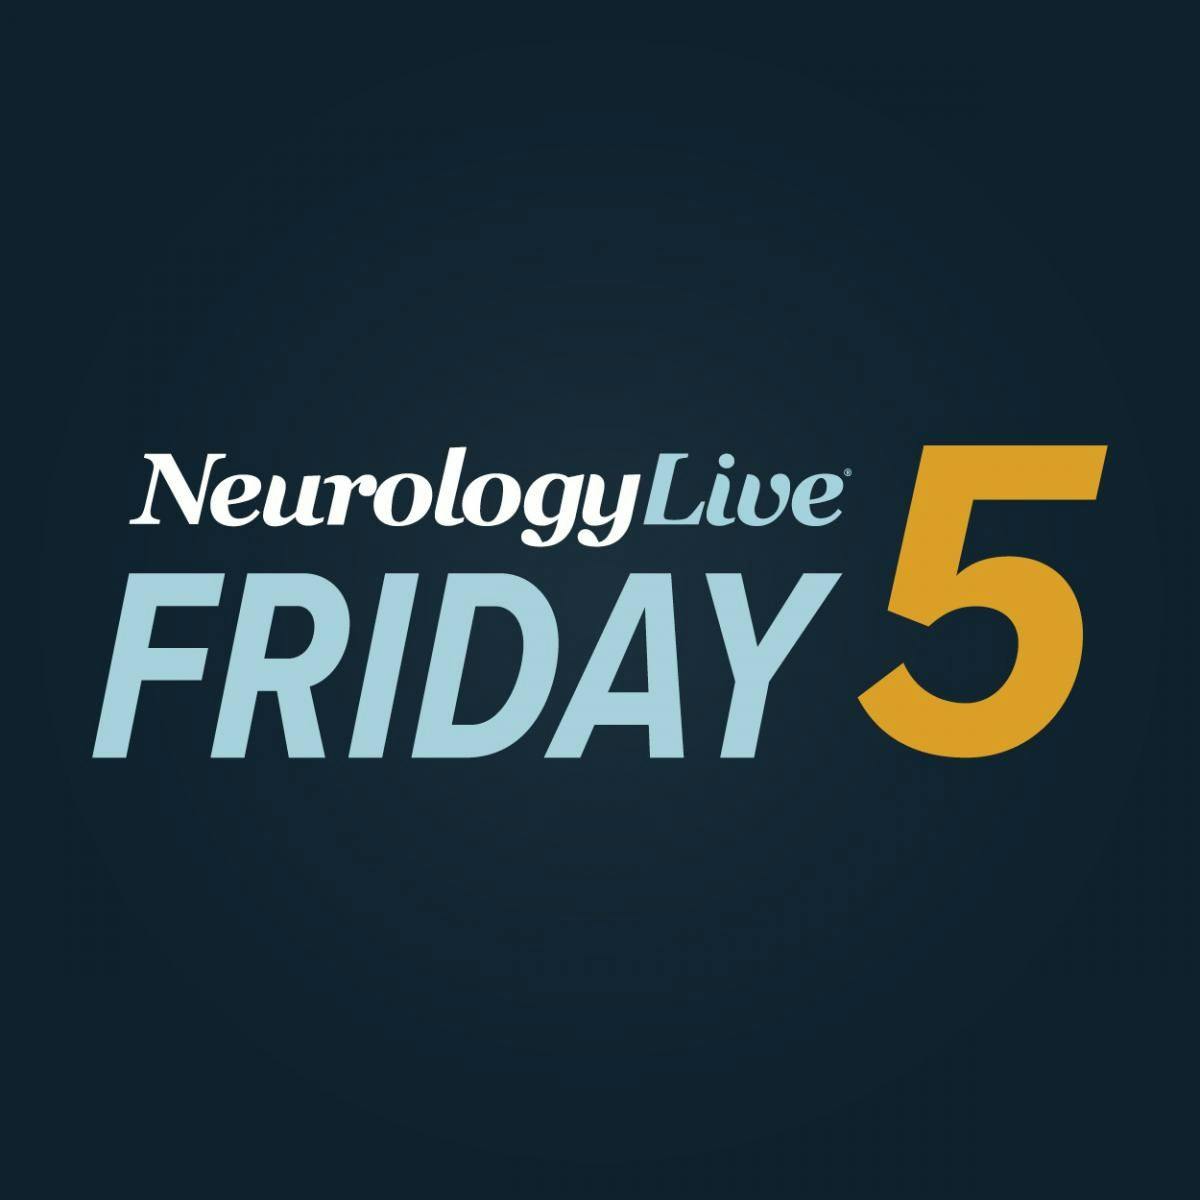 NeurologyLive Friday 5 &mdash; April 10, 2020